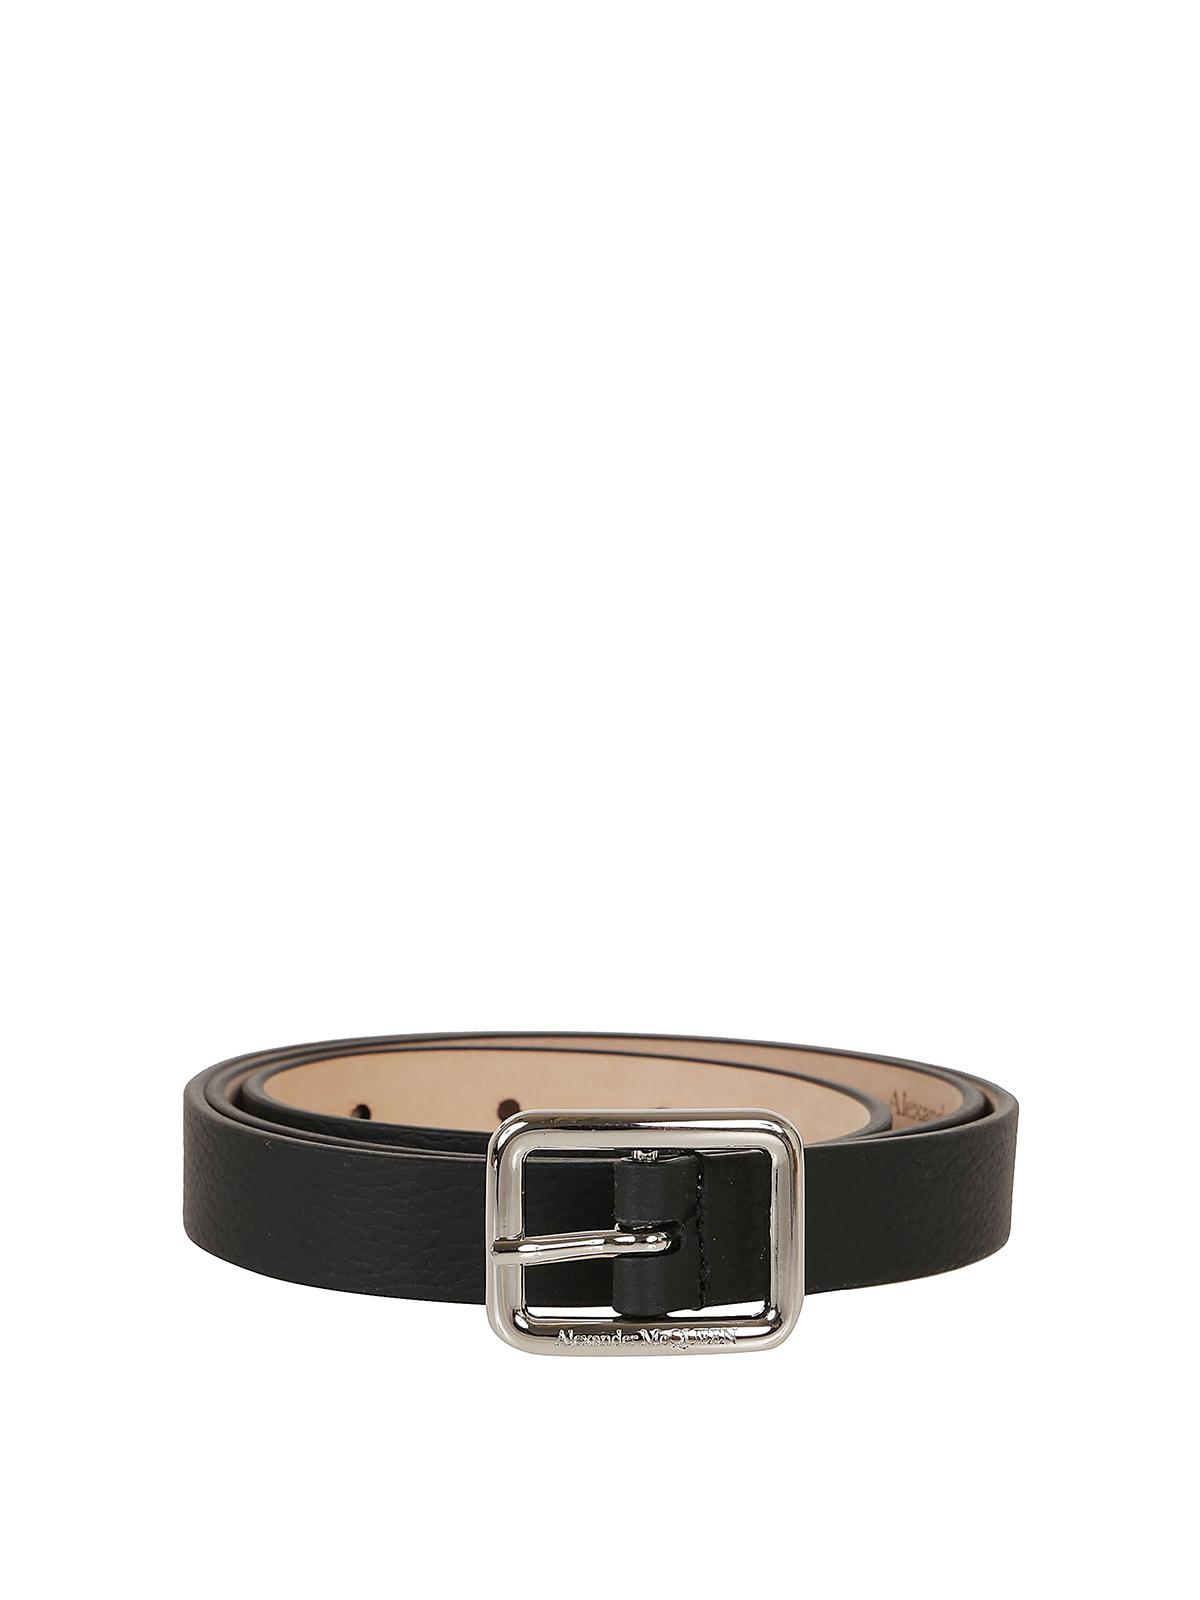 Alexander McQueen Branded Buckle Leather Belt in Black for Men - Lyst